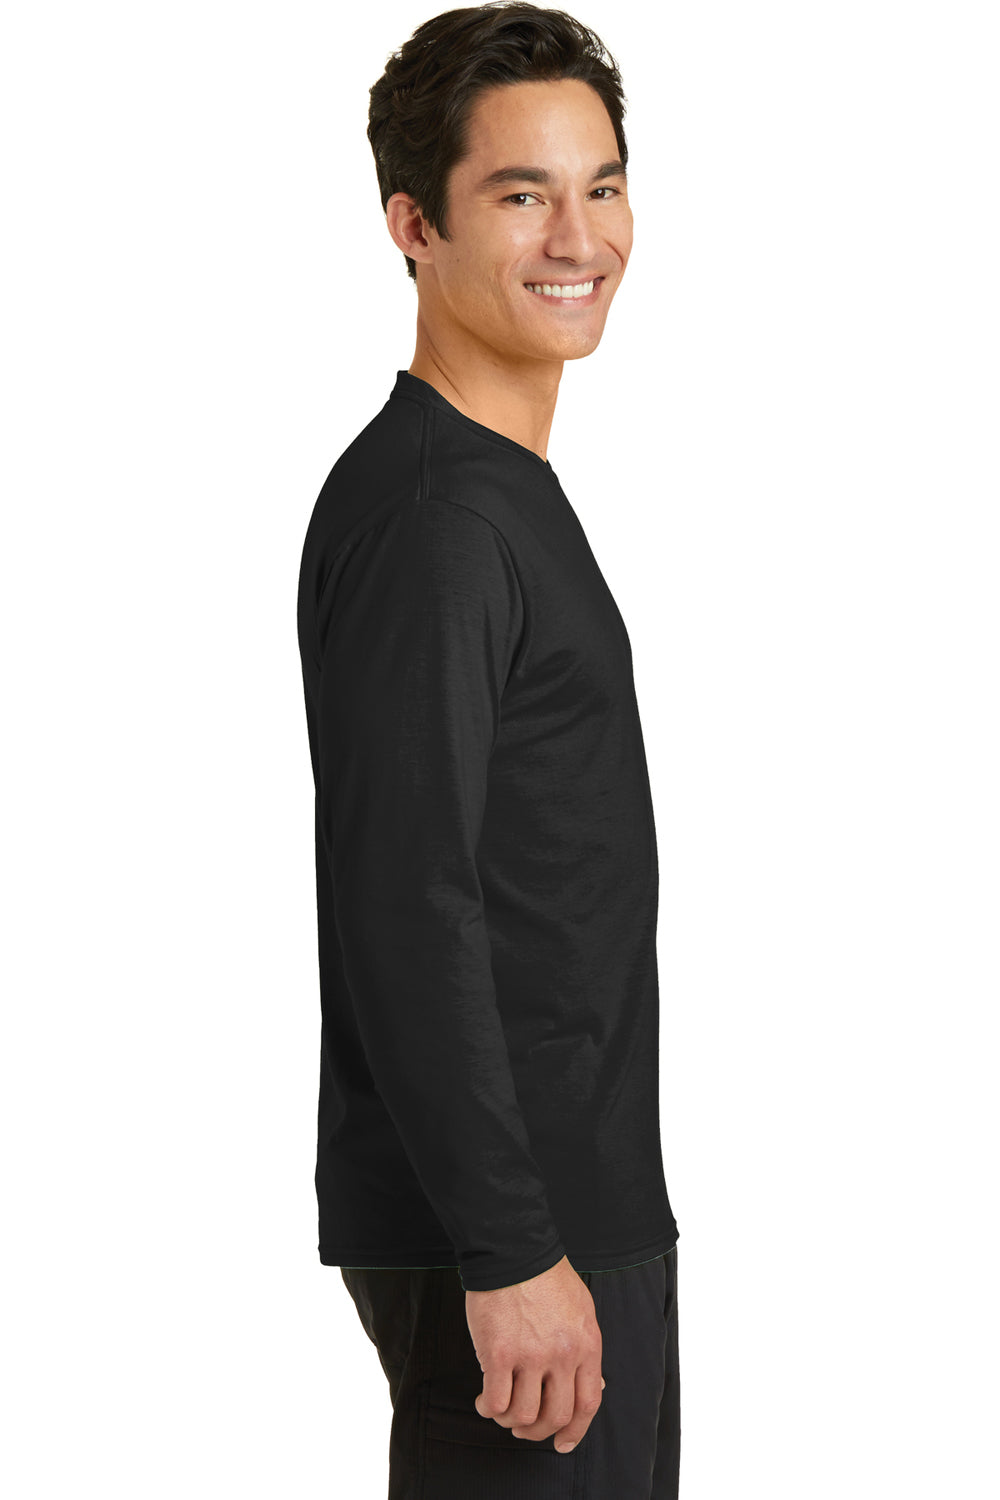 Port & Company PC381LS Mens Dry Zone Performance Moisture Wicking Long Sleeve Crewneck T-Shirt Black Side